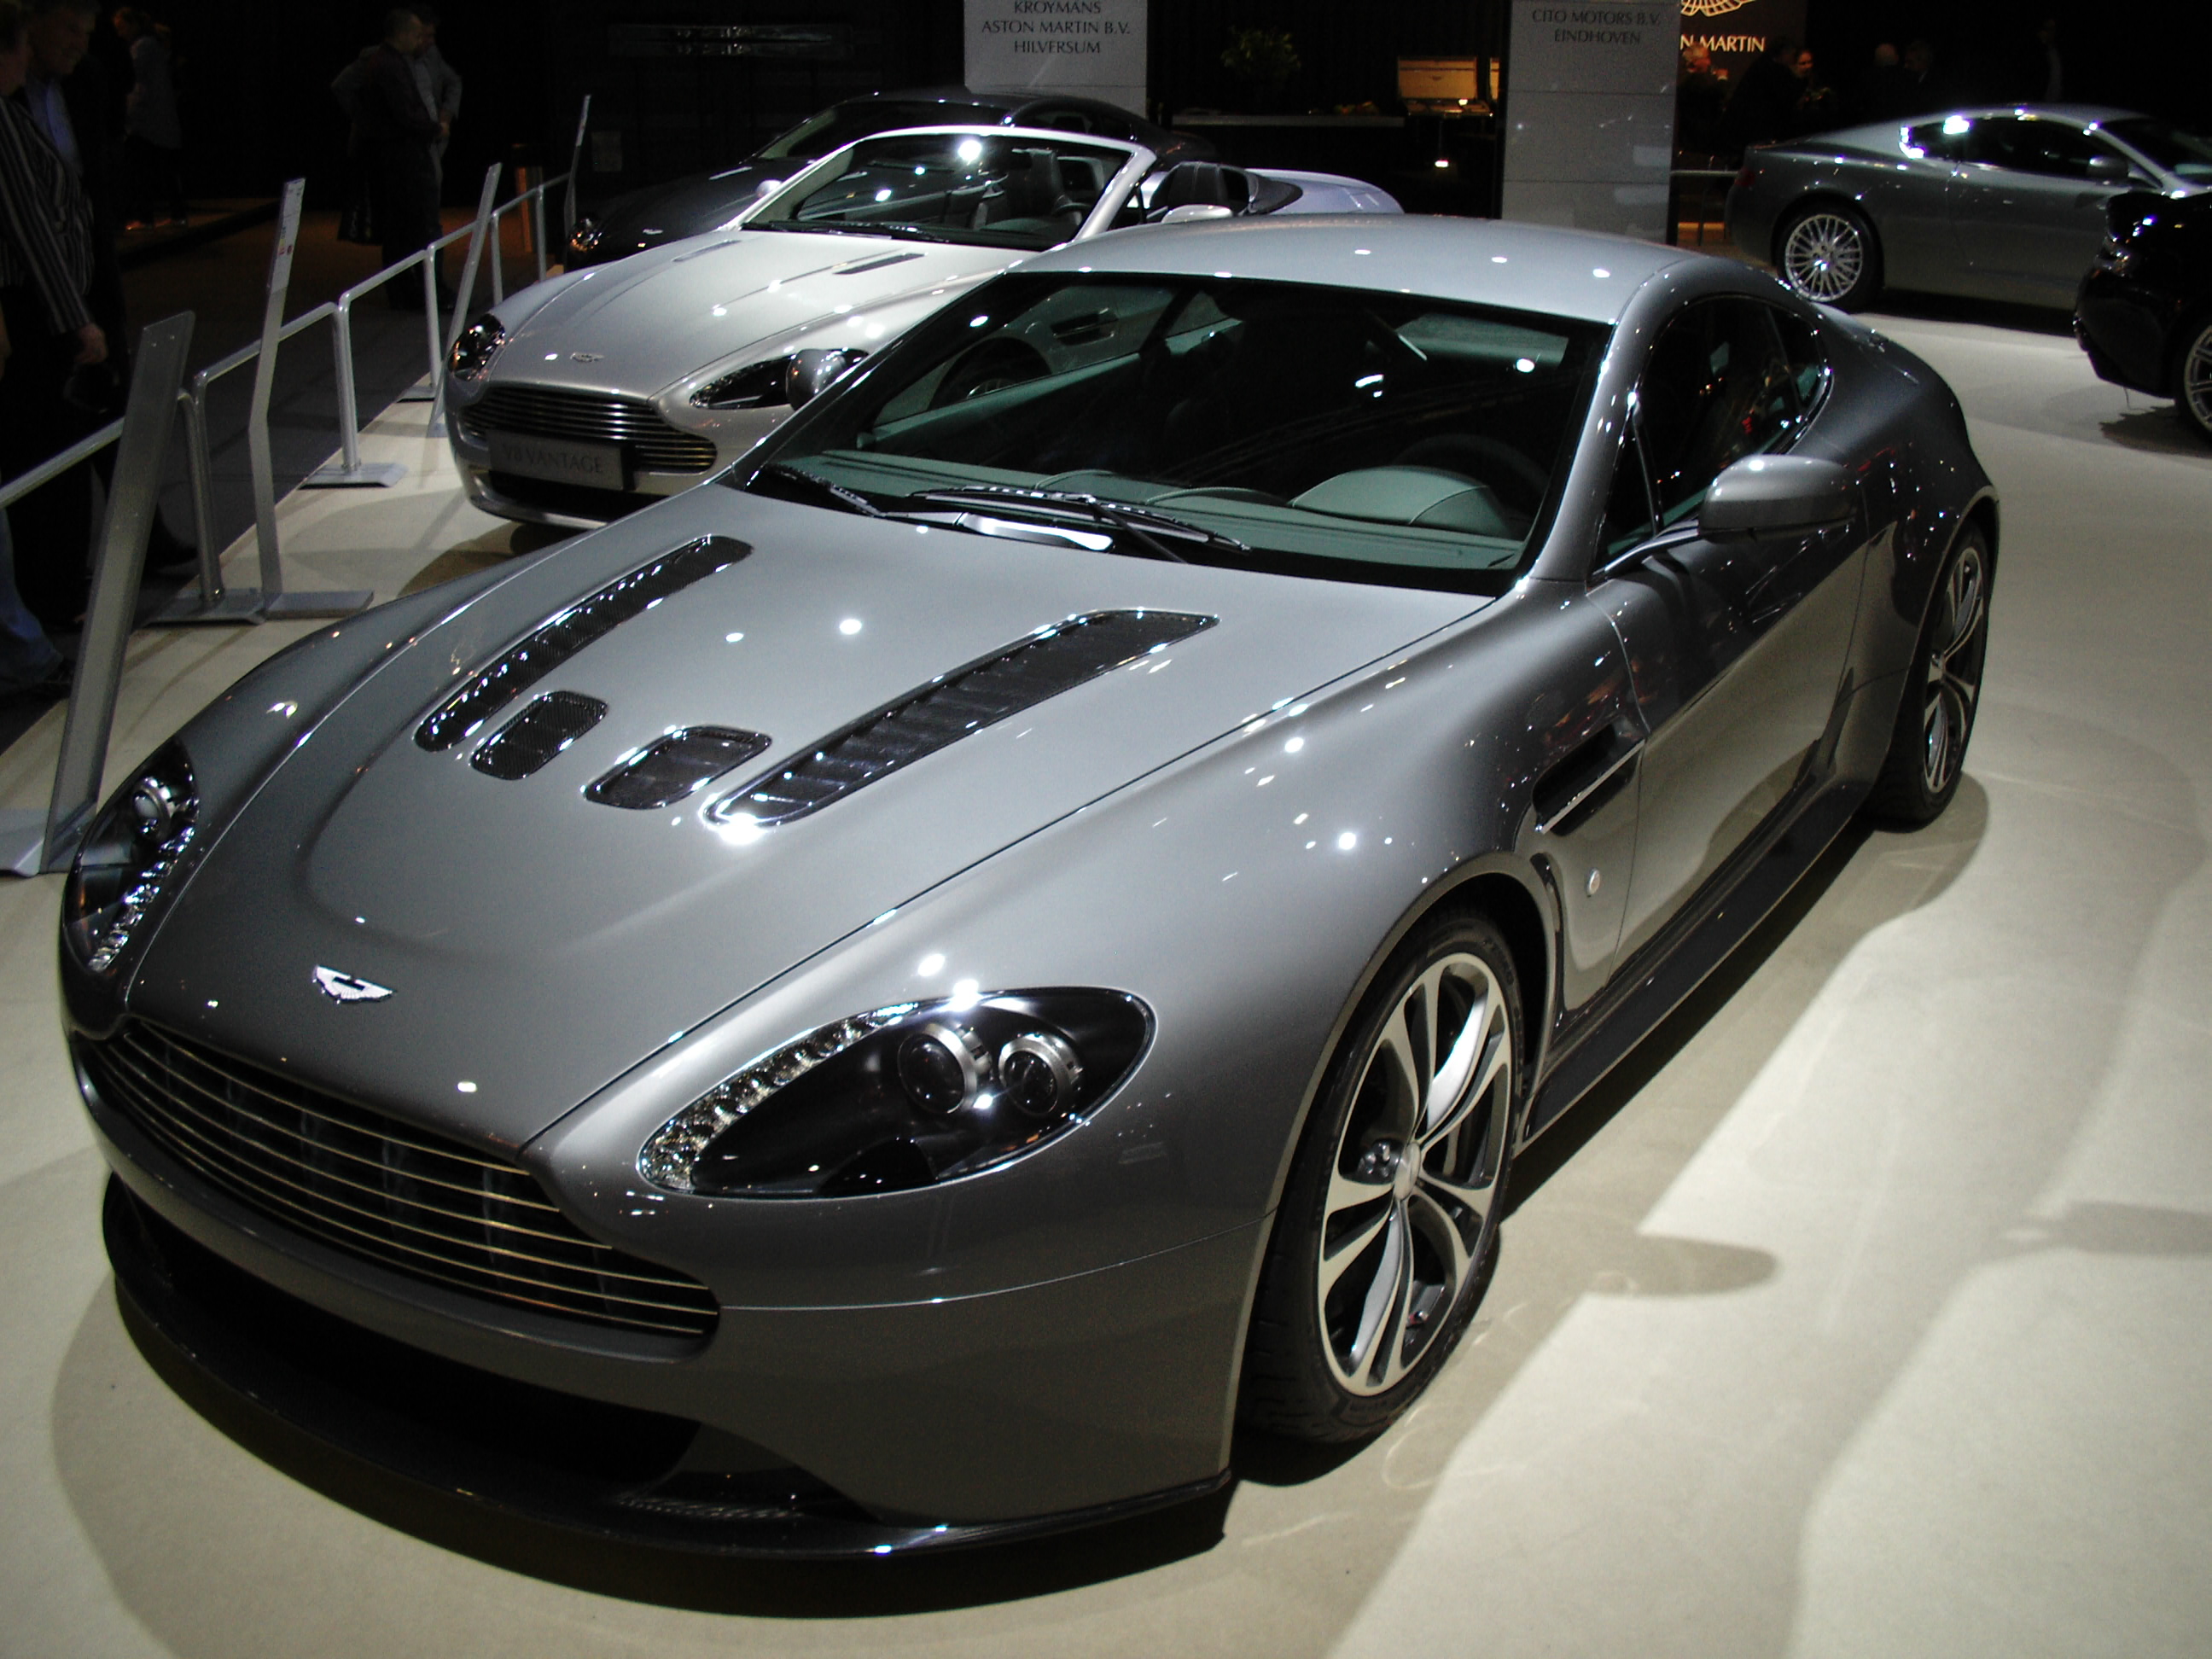 File:Aston Martin V12 Vantage AutoRAI 2009.jpg - Wikimedia Commons